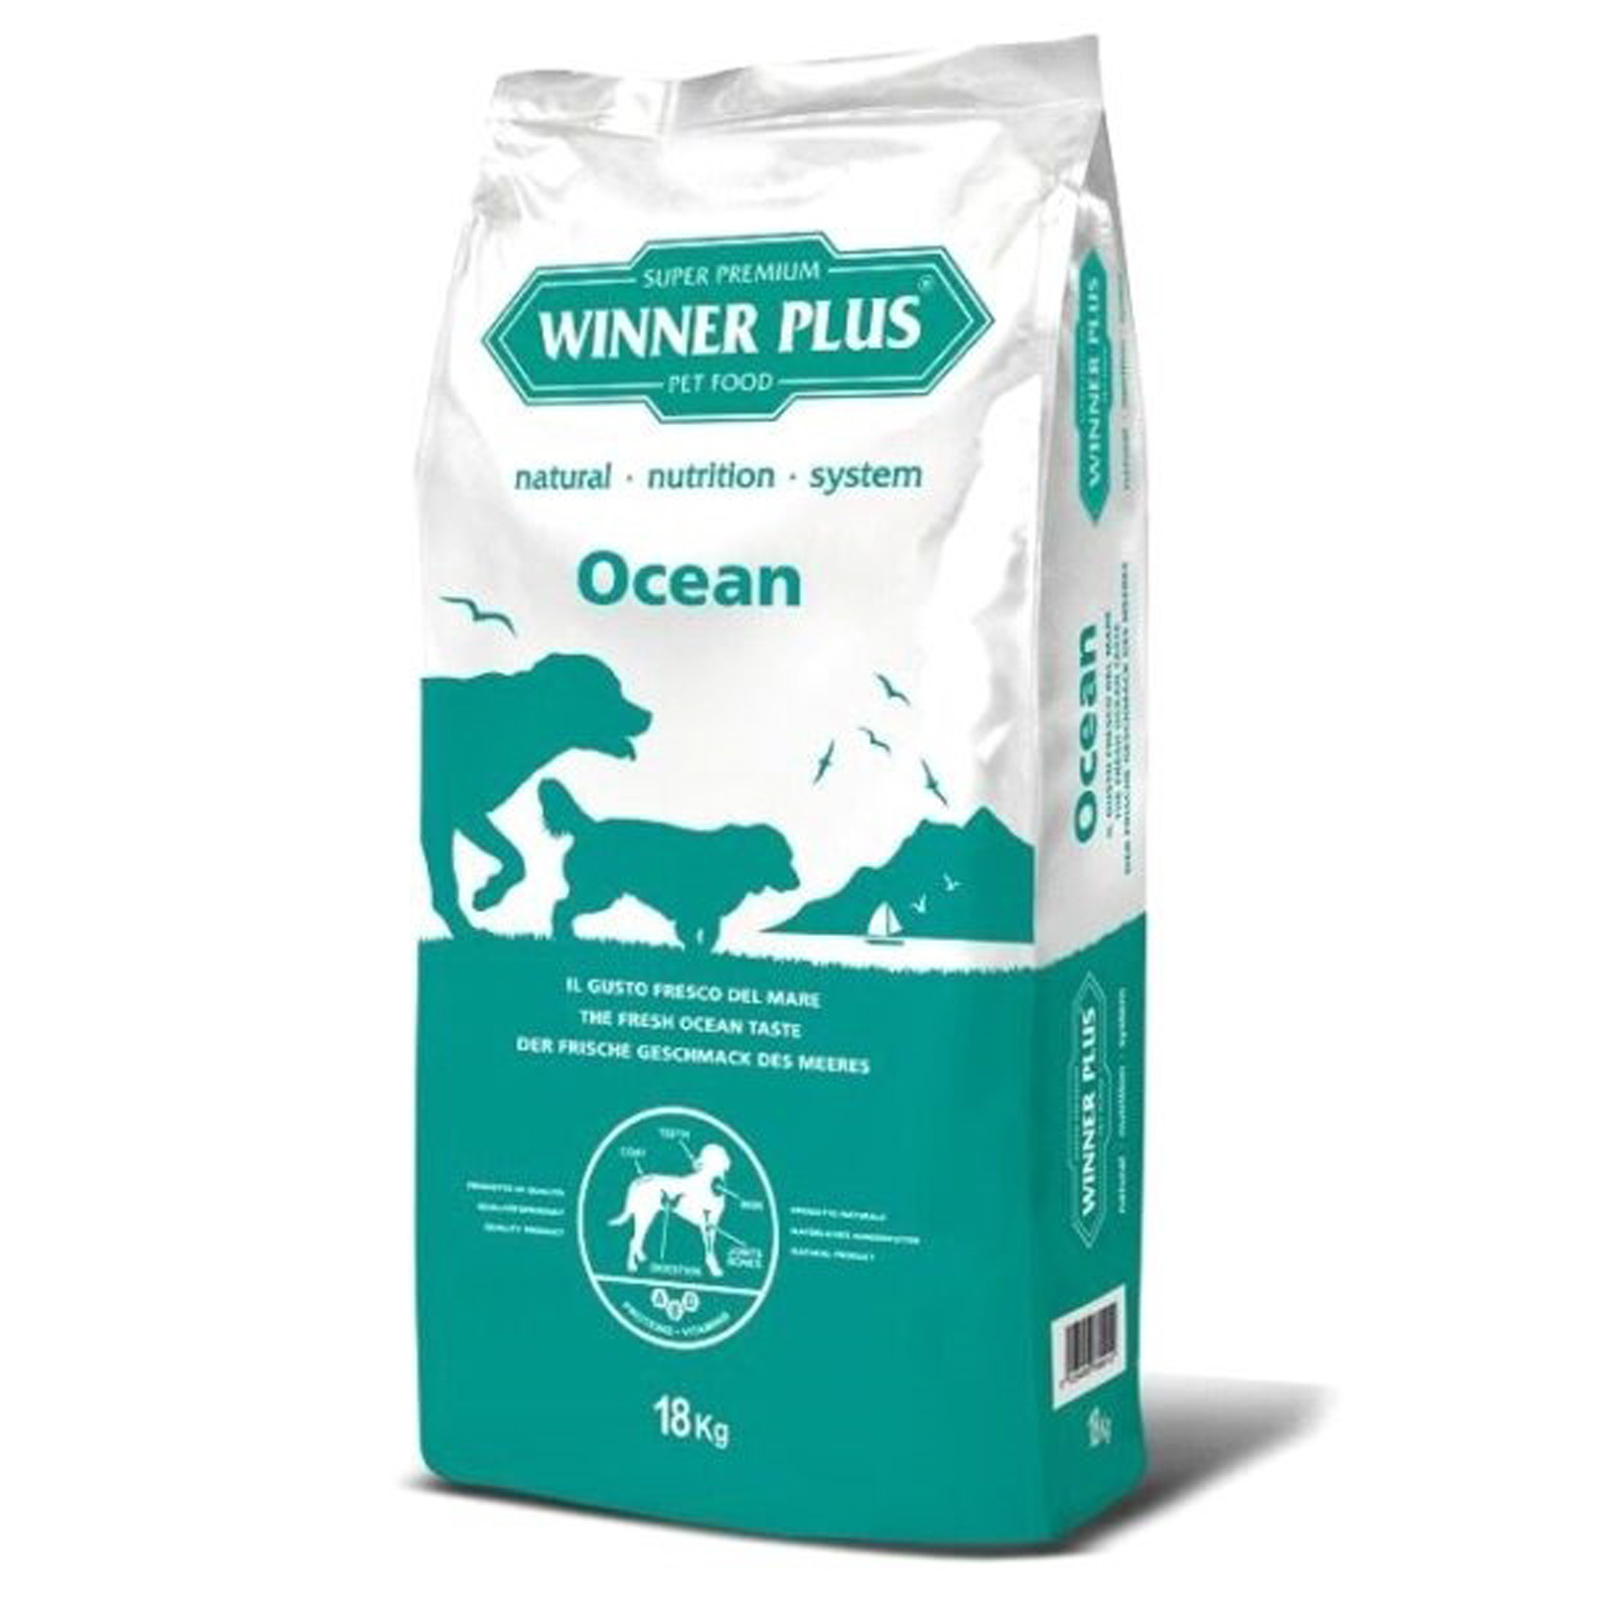 Winner Plus Professional Premium Ocean hundfoder 18 kg